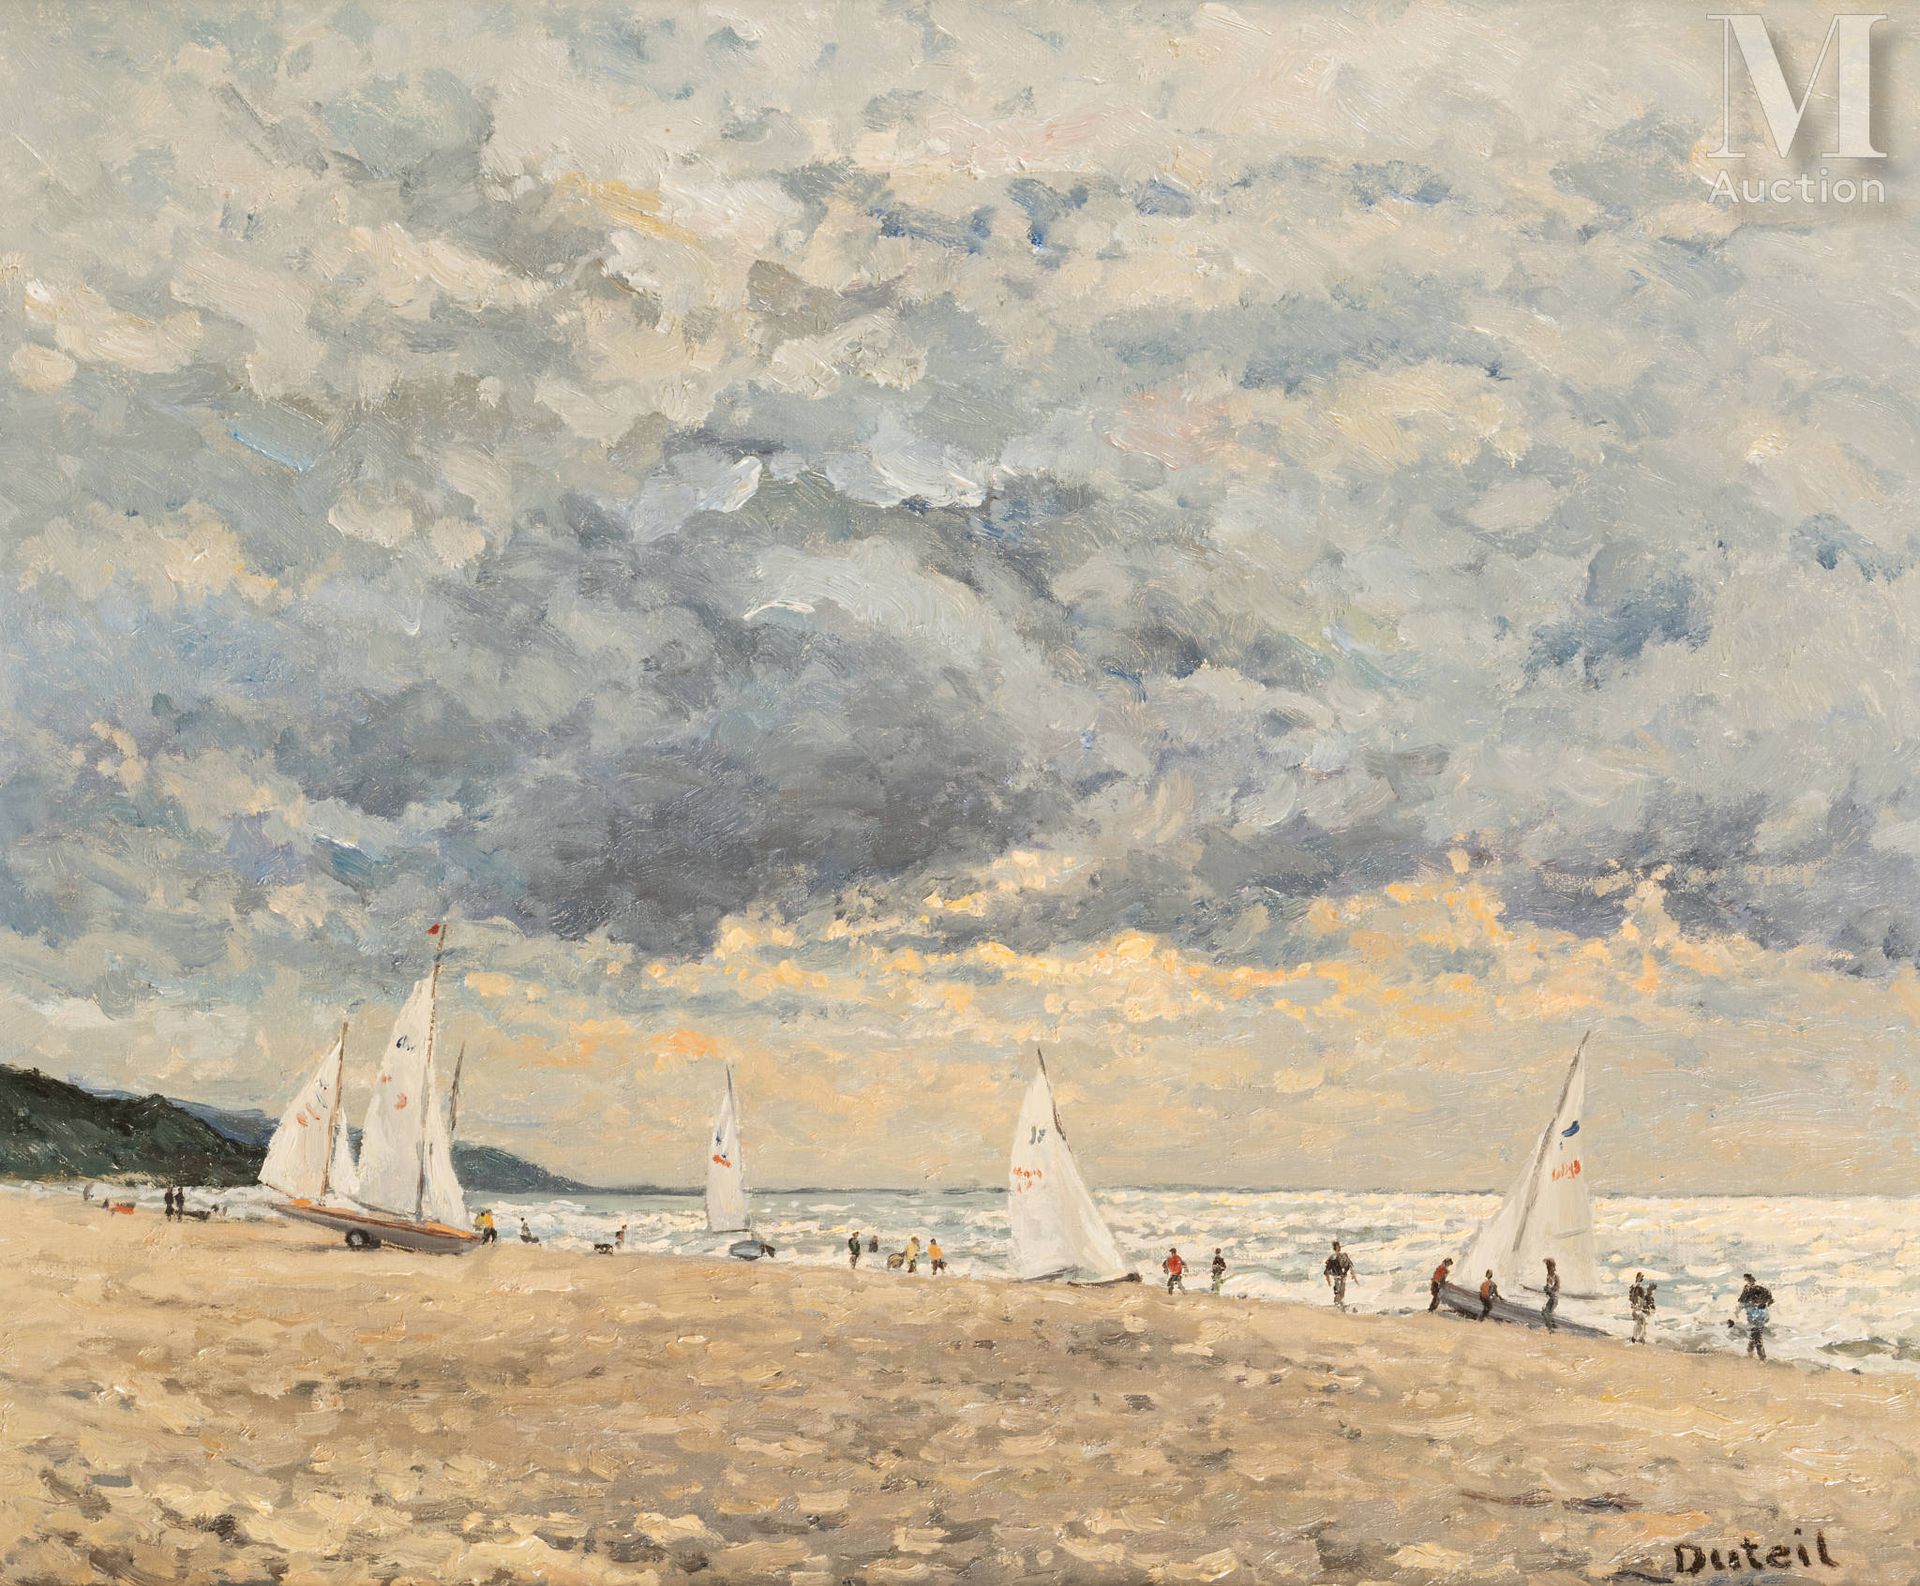 Jean-Claude DUTEIL A contraluz en la playa

Óleo sobre lienzo 
46,5 x 55 cm
Firm&hellip;